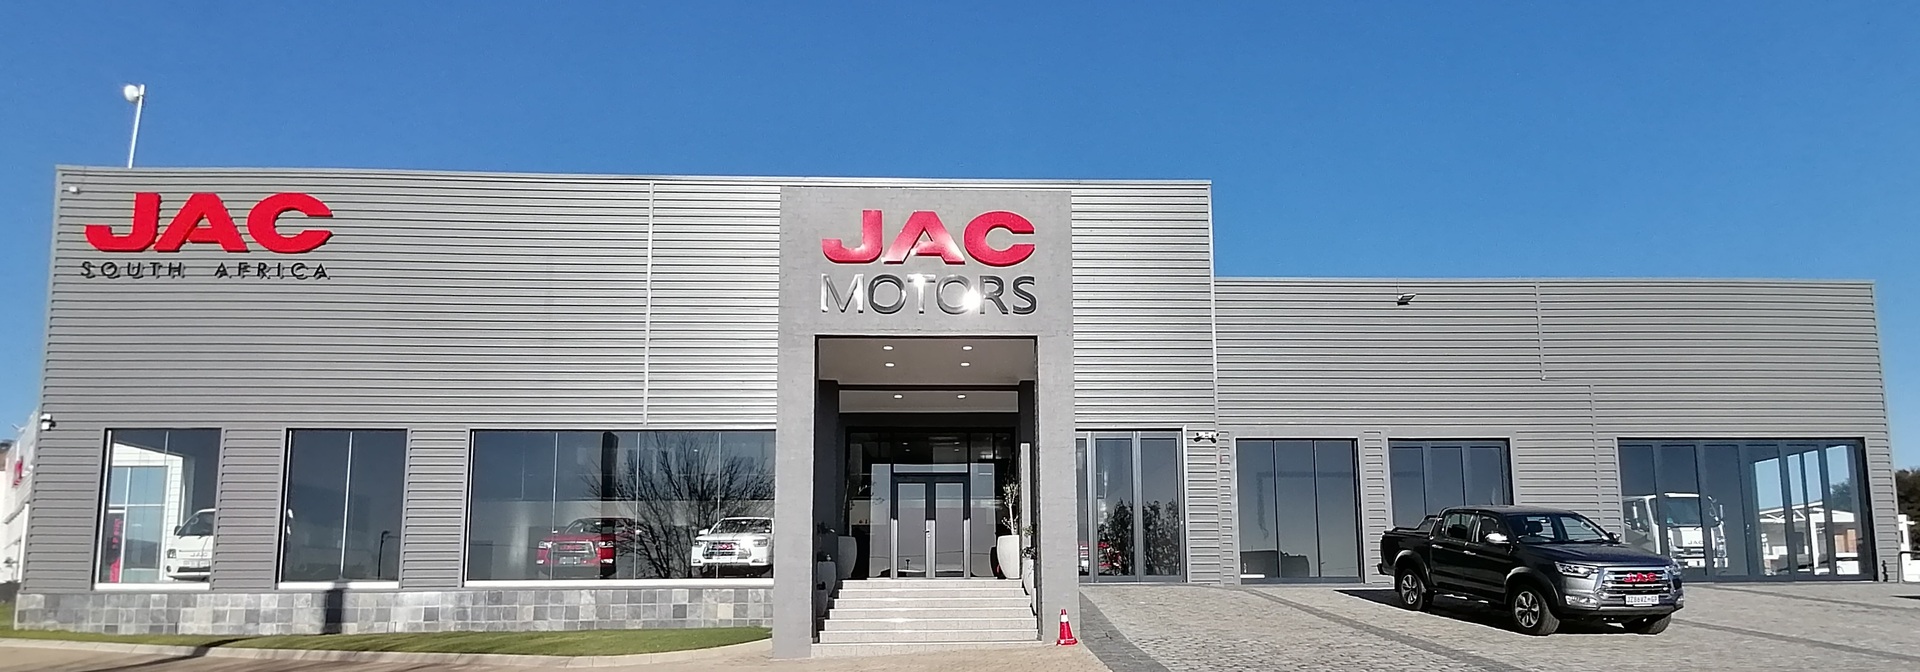 24 Hour Roadside Assistance Service Announced by JAC Motors